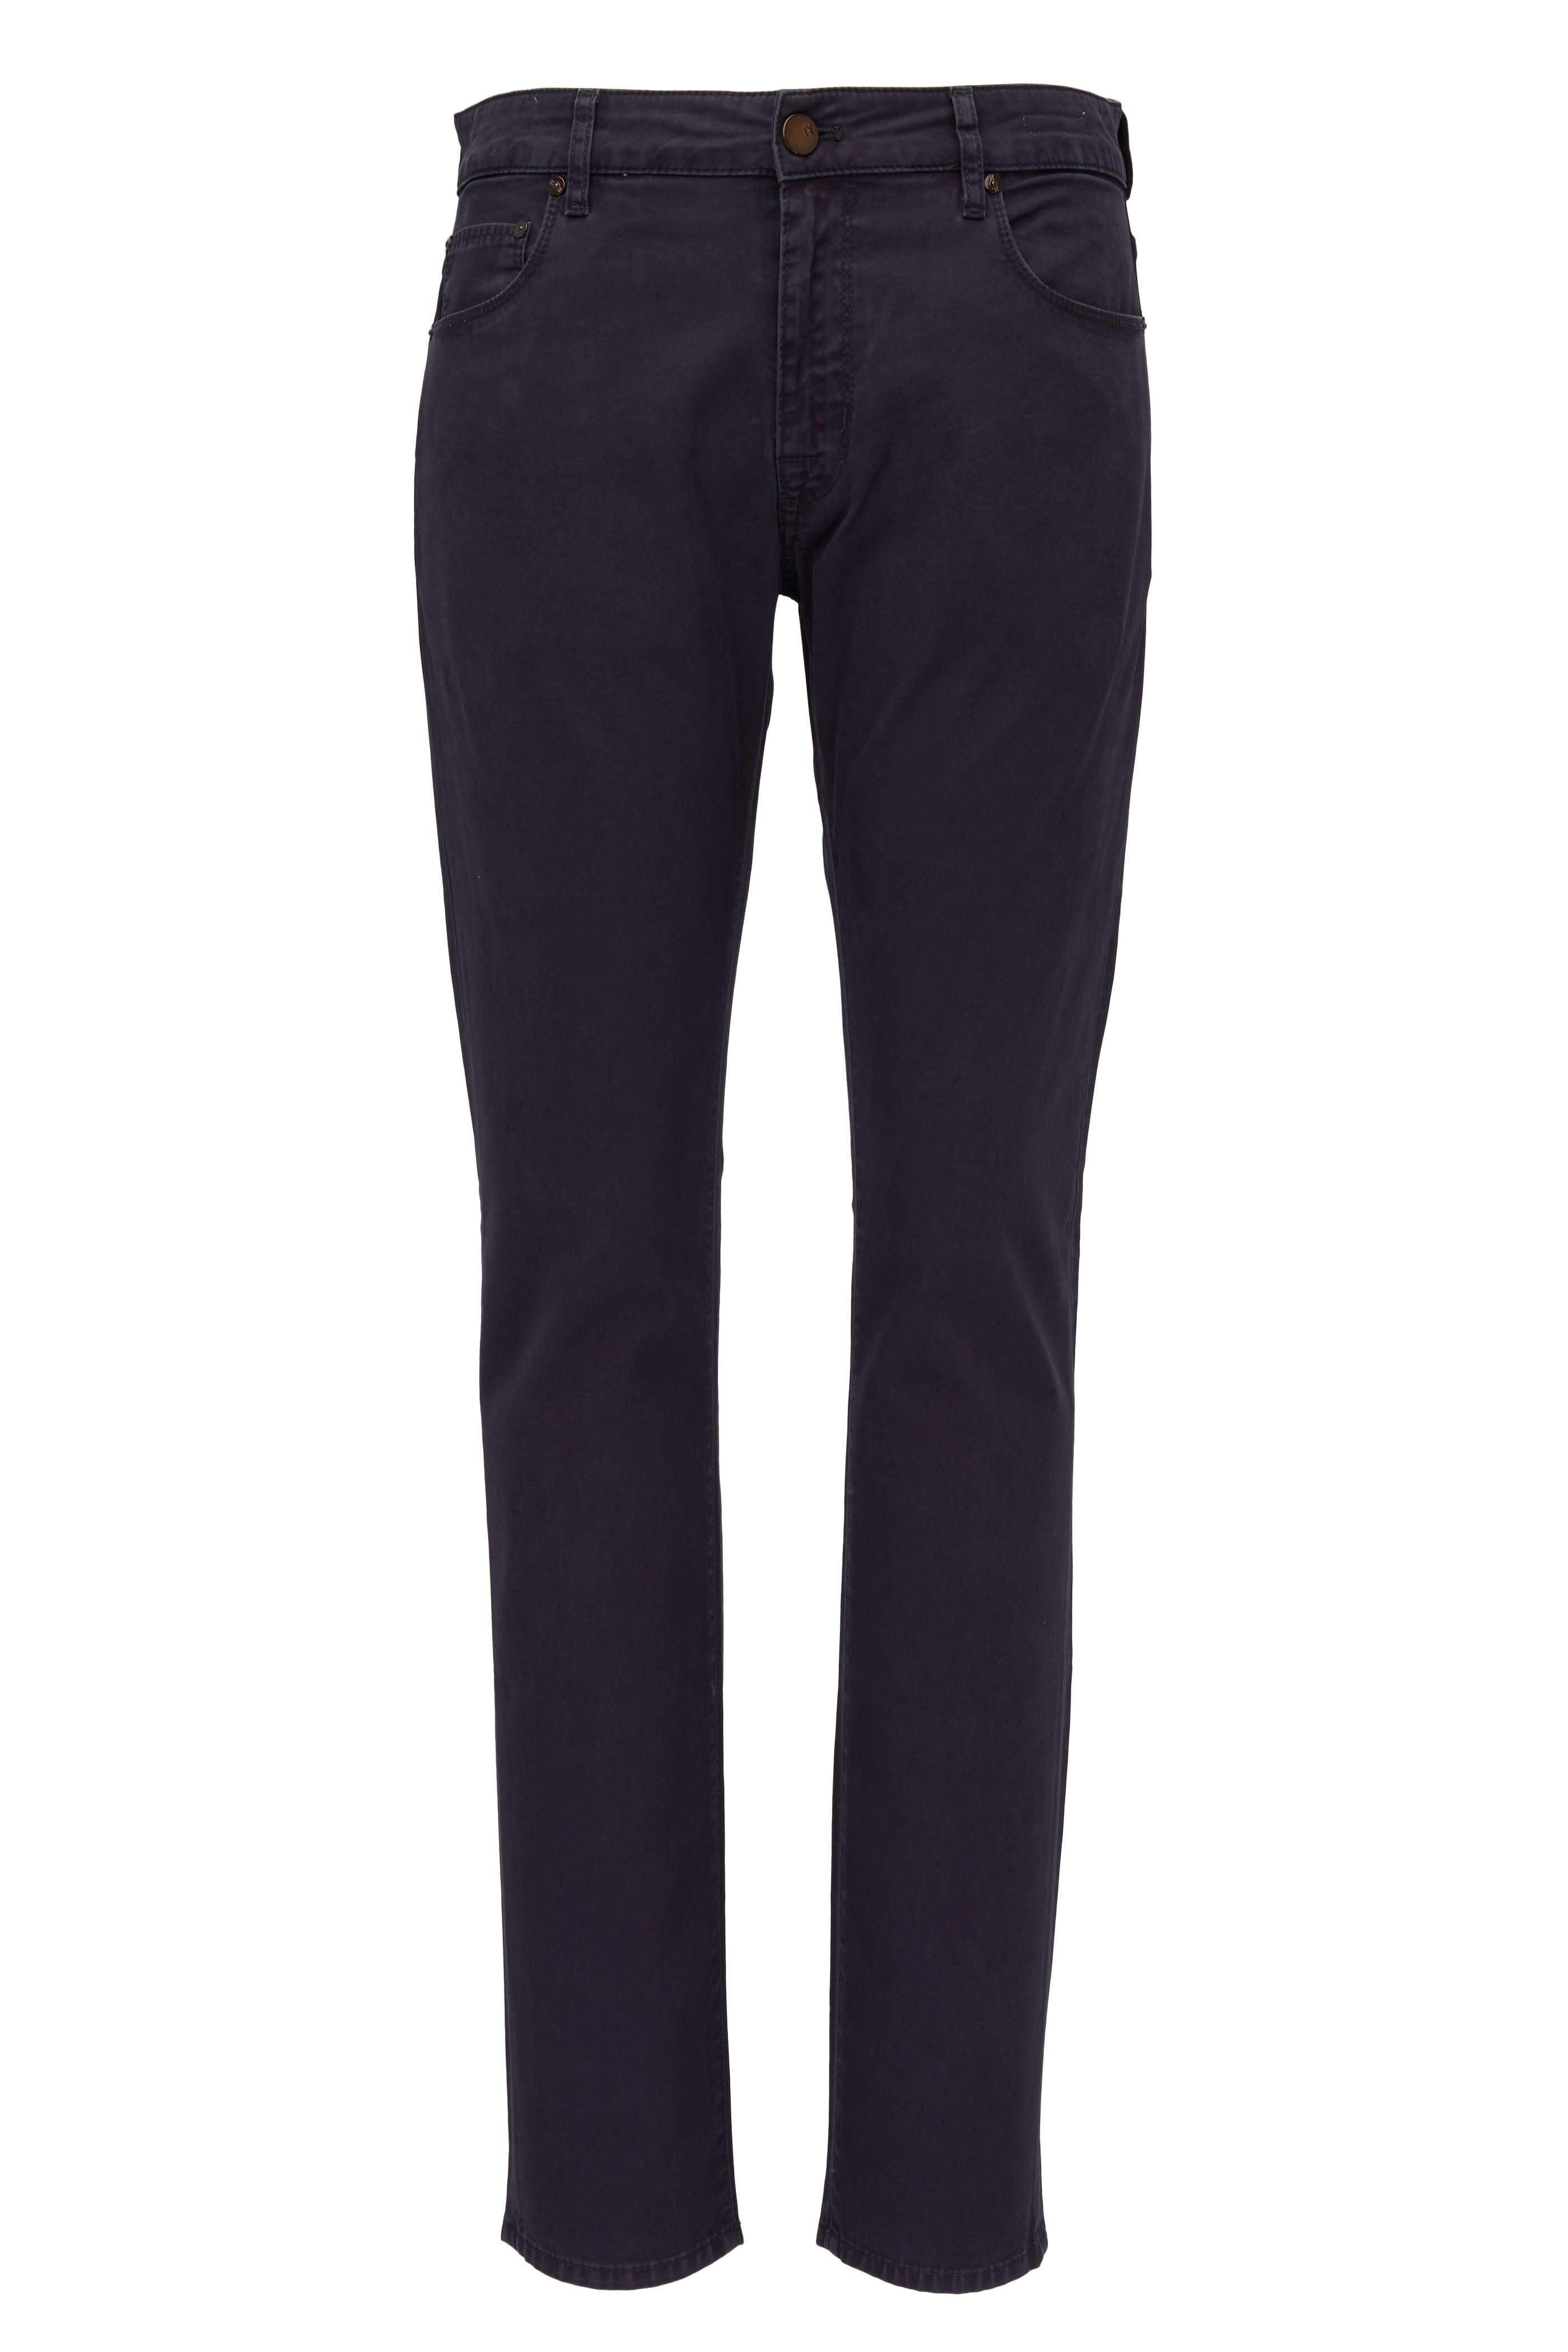 PT Torino - Jazz Navy Dyed Denim Jeans | Mitchell Stores